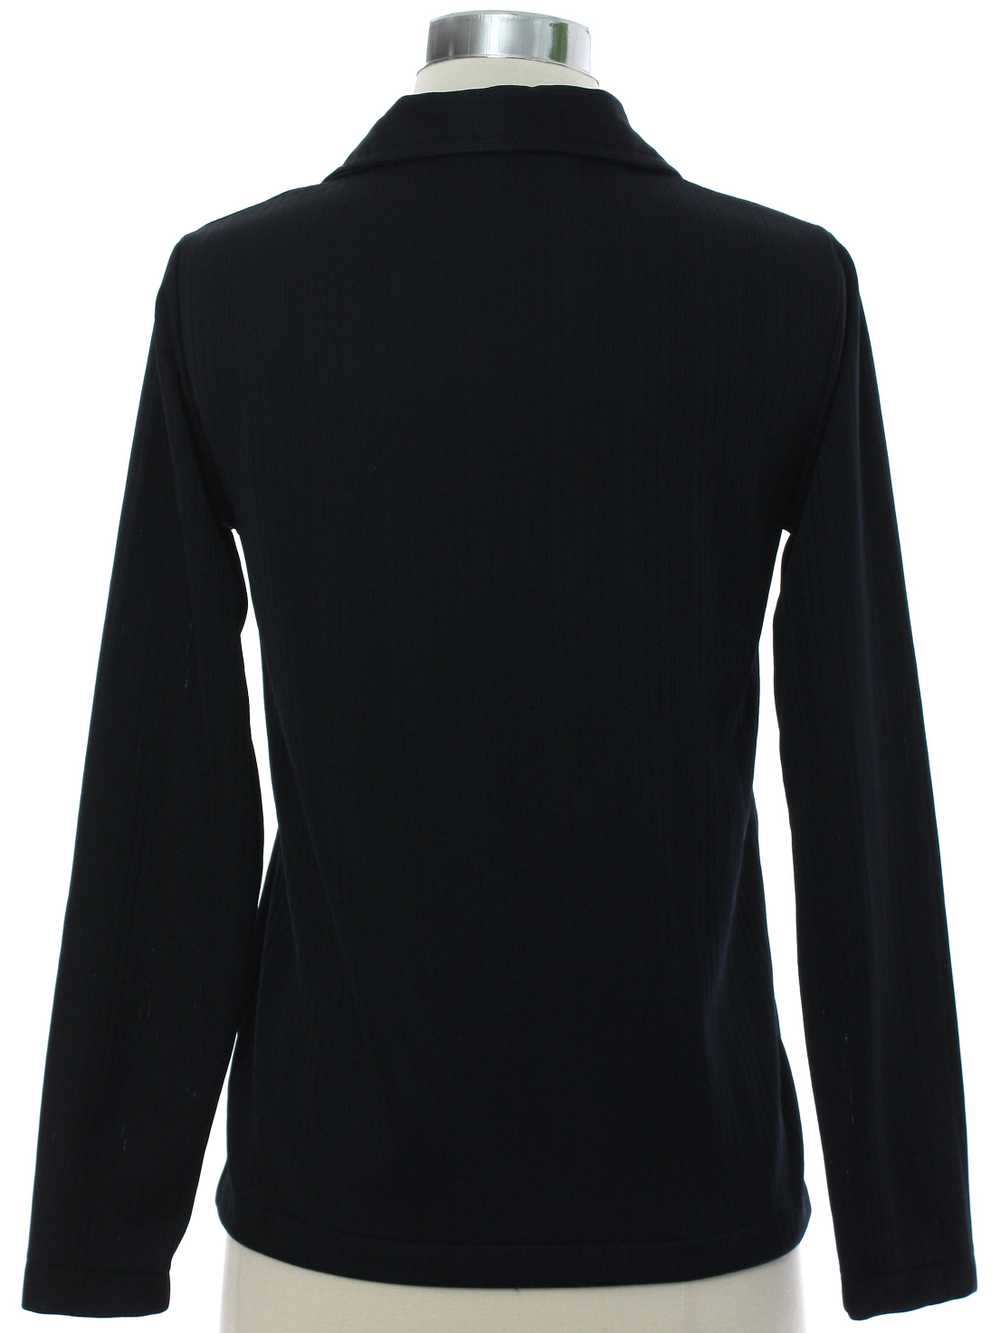 1970's Womens Black Mod Knit Shirt - image 3